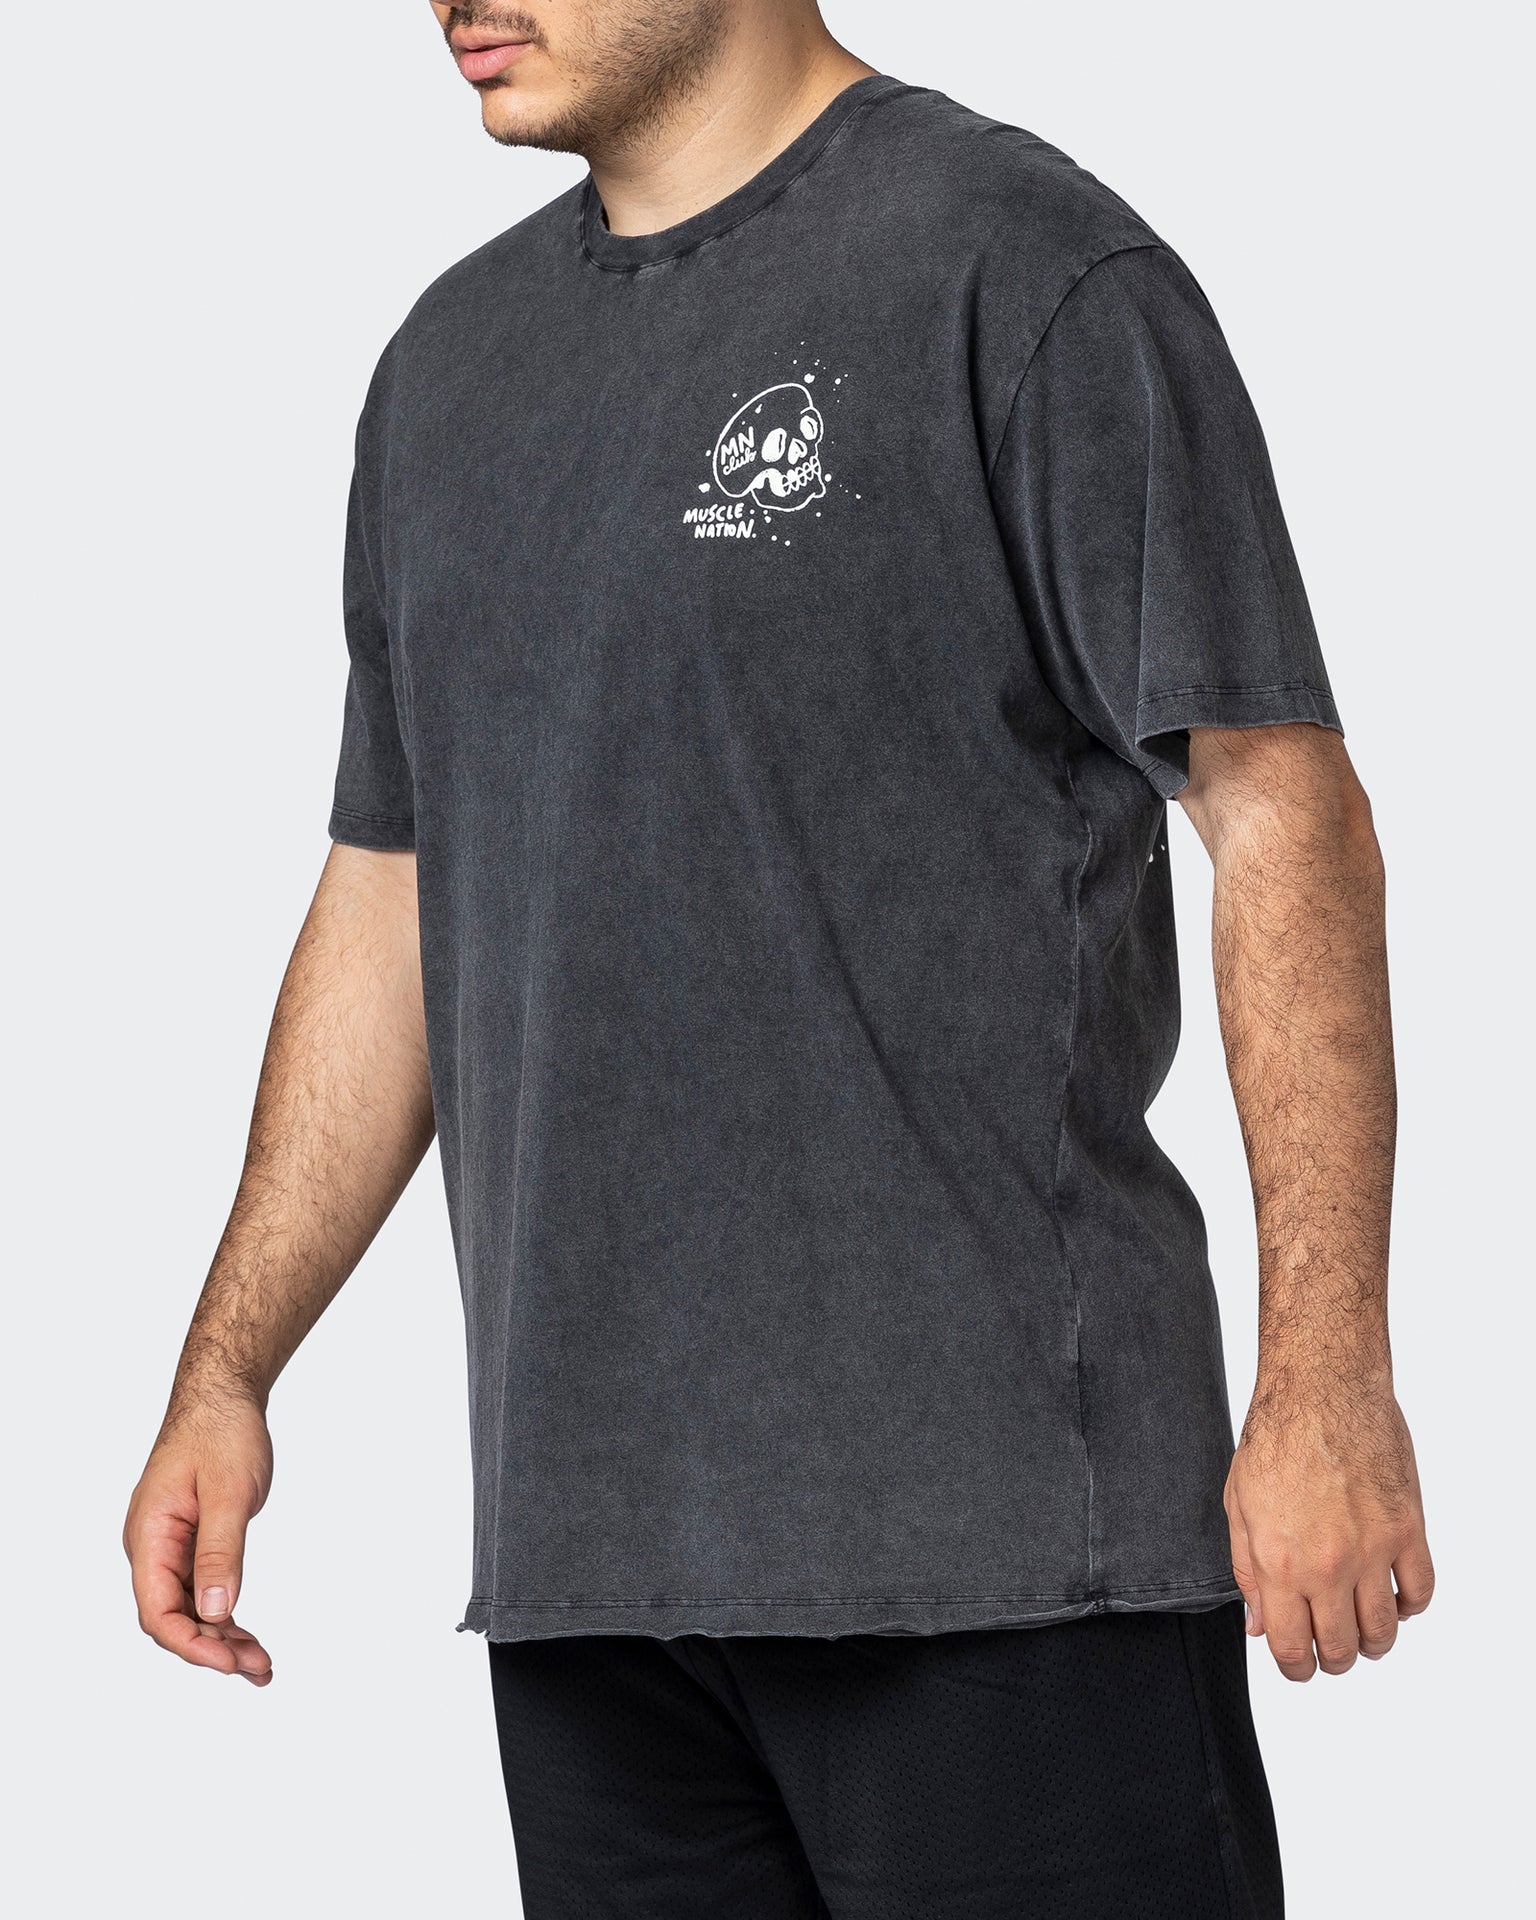 musclenation T-Shirts Mens Graffiti Tag Oversized Vintage Tee Washed Black / Capri Blue